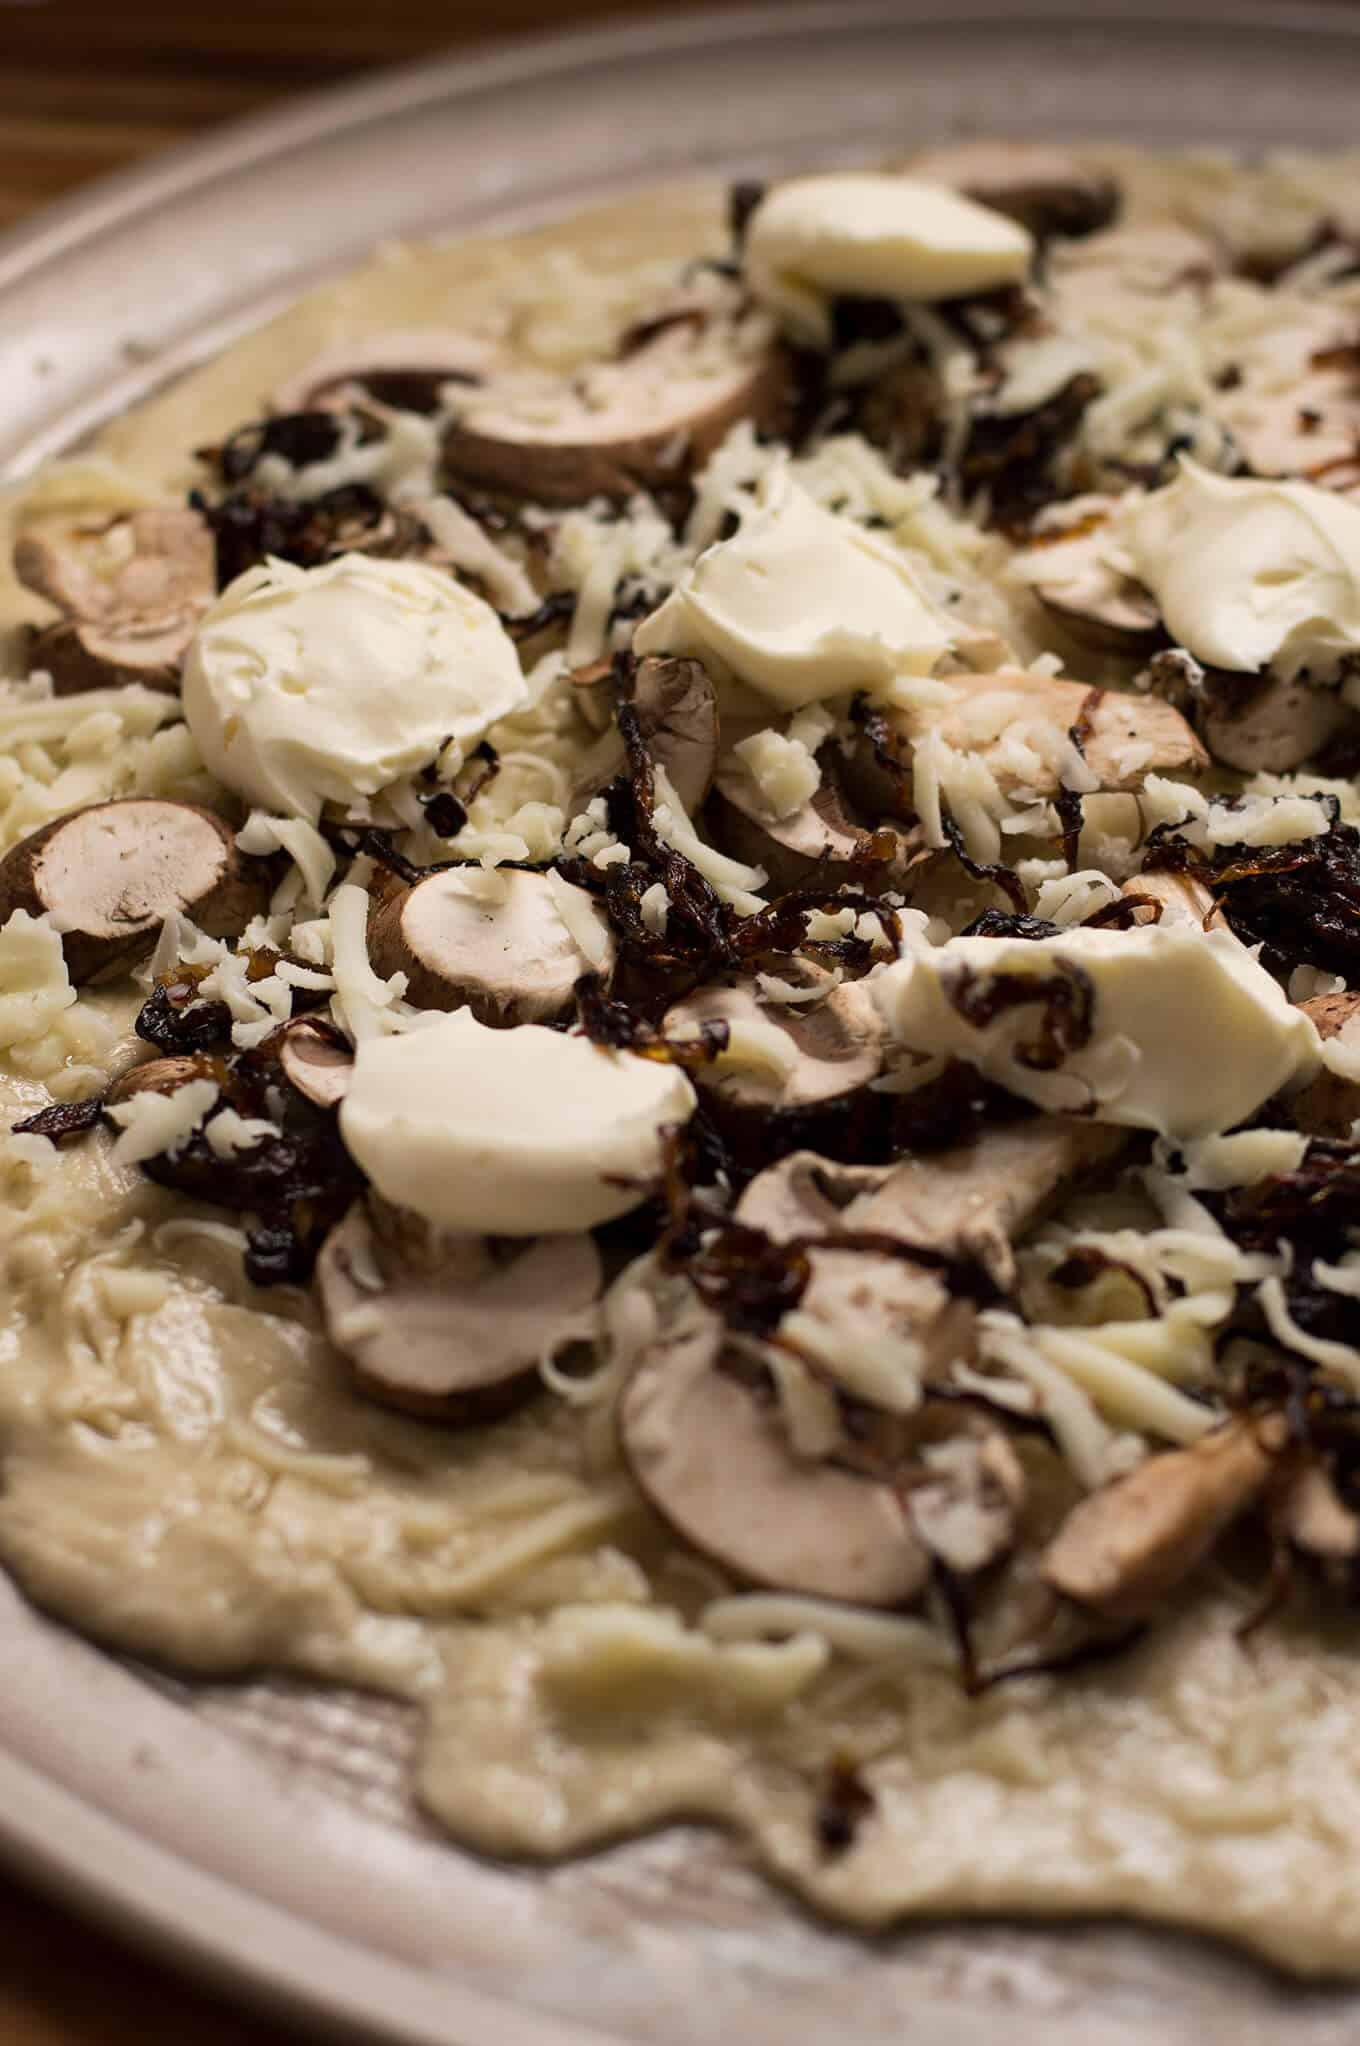 Prepared mushroom pizza on puff pastry dough.